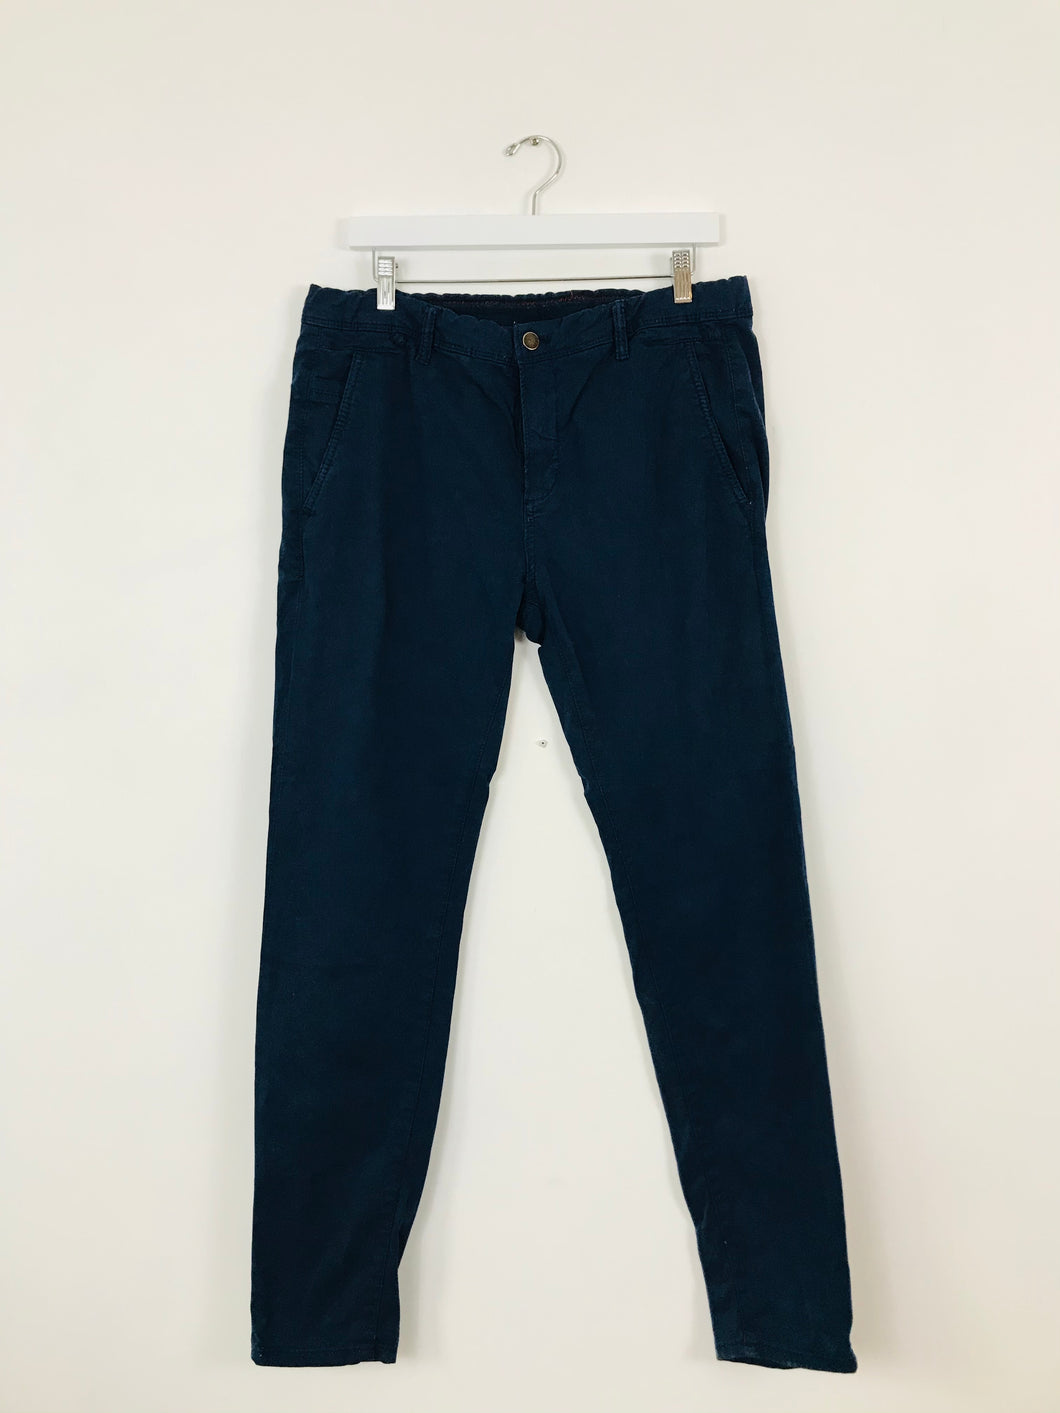 Zara Men’s Chino Slim Fit Trousers | 40 UK31 | Blue